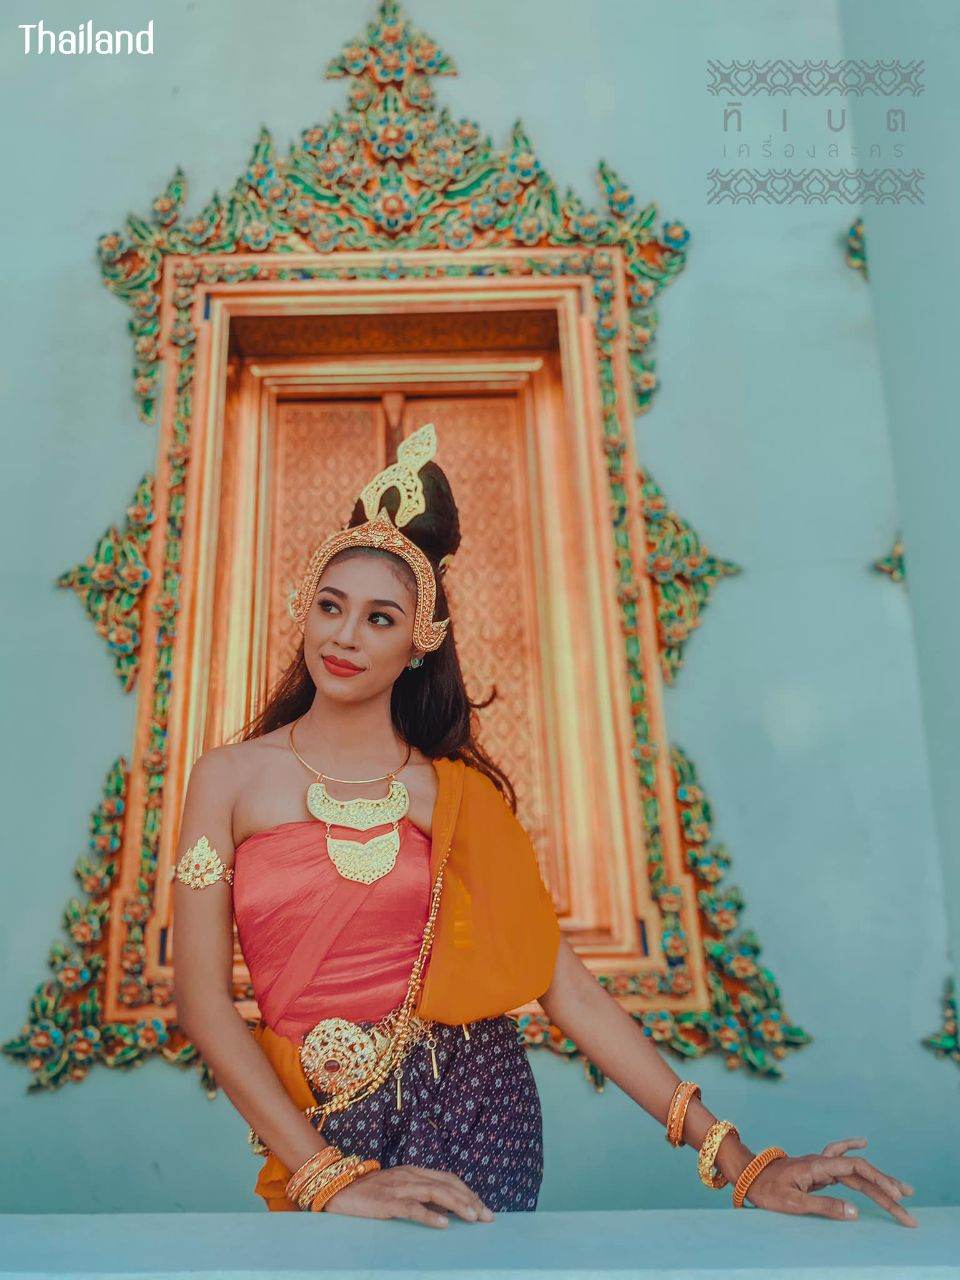 THAILAND 🇹🇭 | Srivijaya era, การแต่งกายสมัยศรีวิชัย